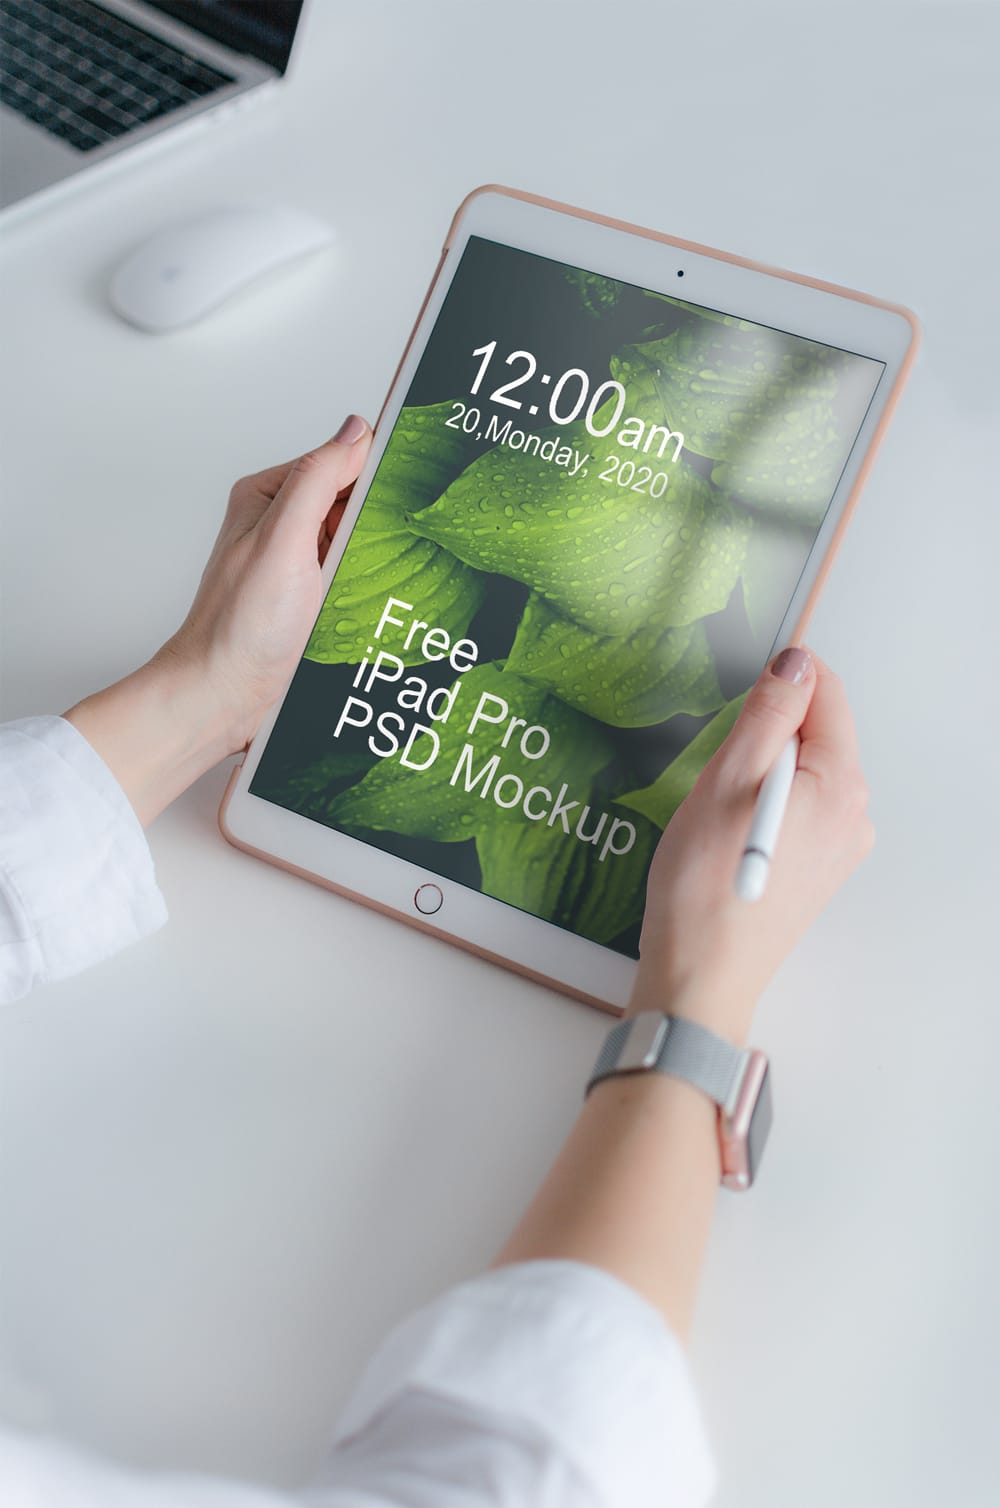 Free iPad Pro Mockup PSD Template